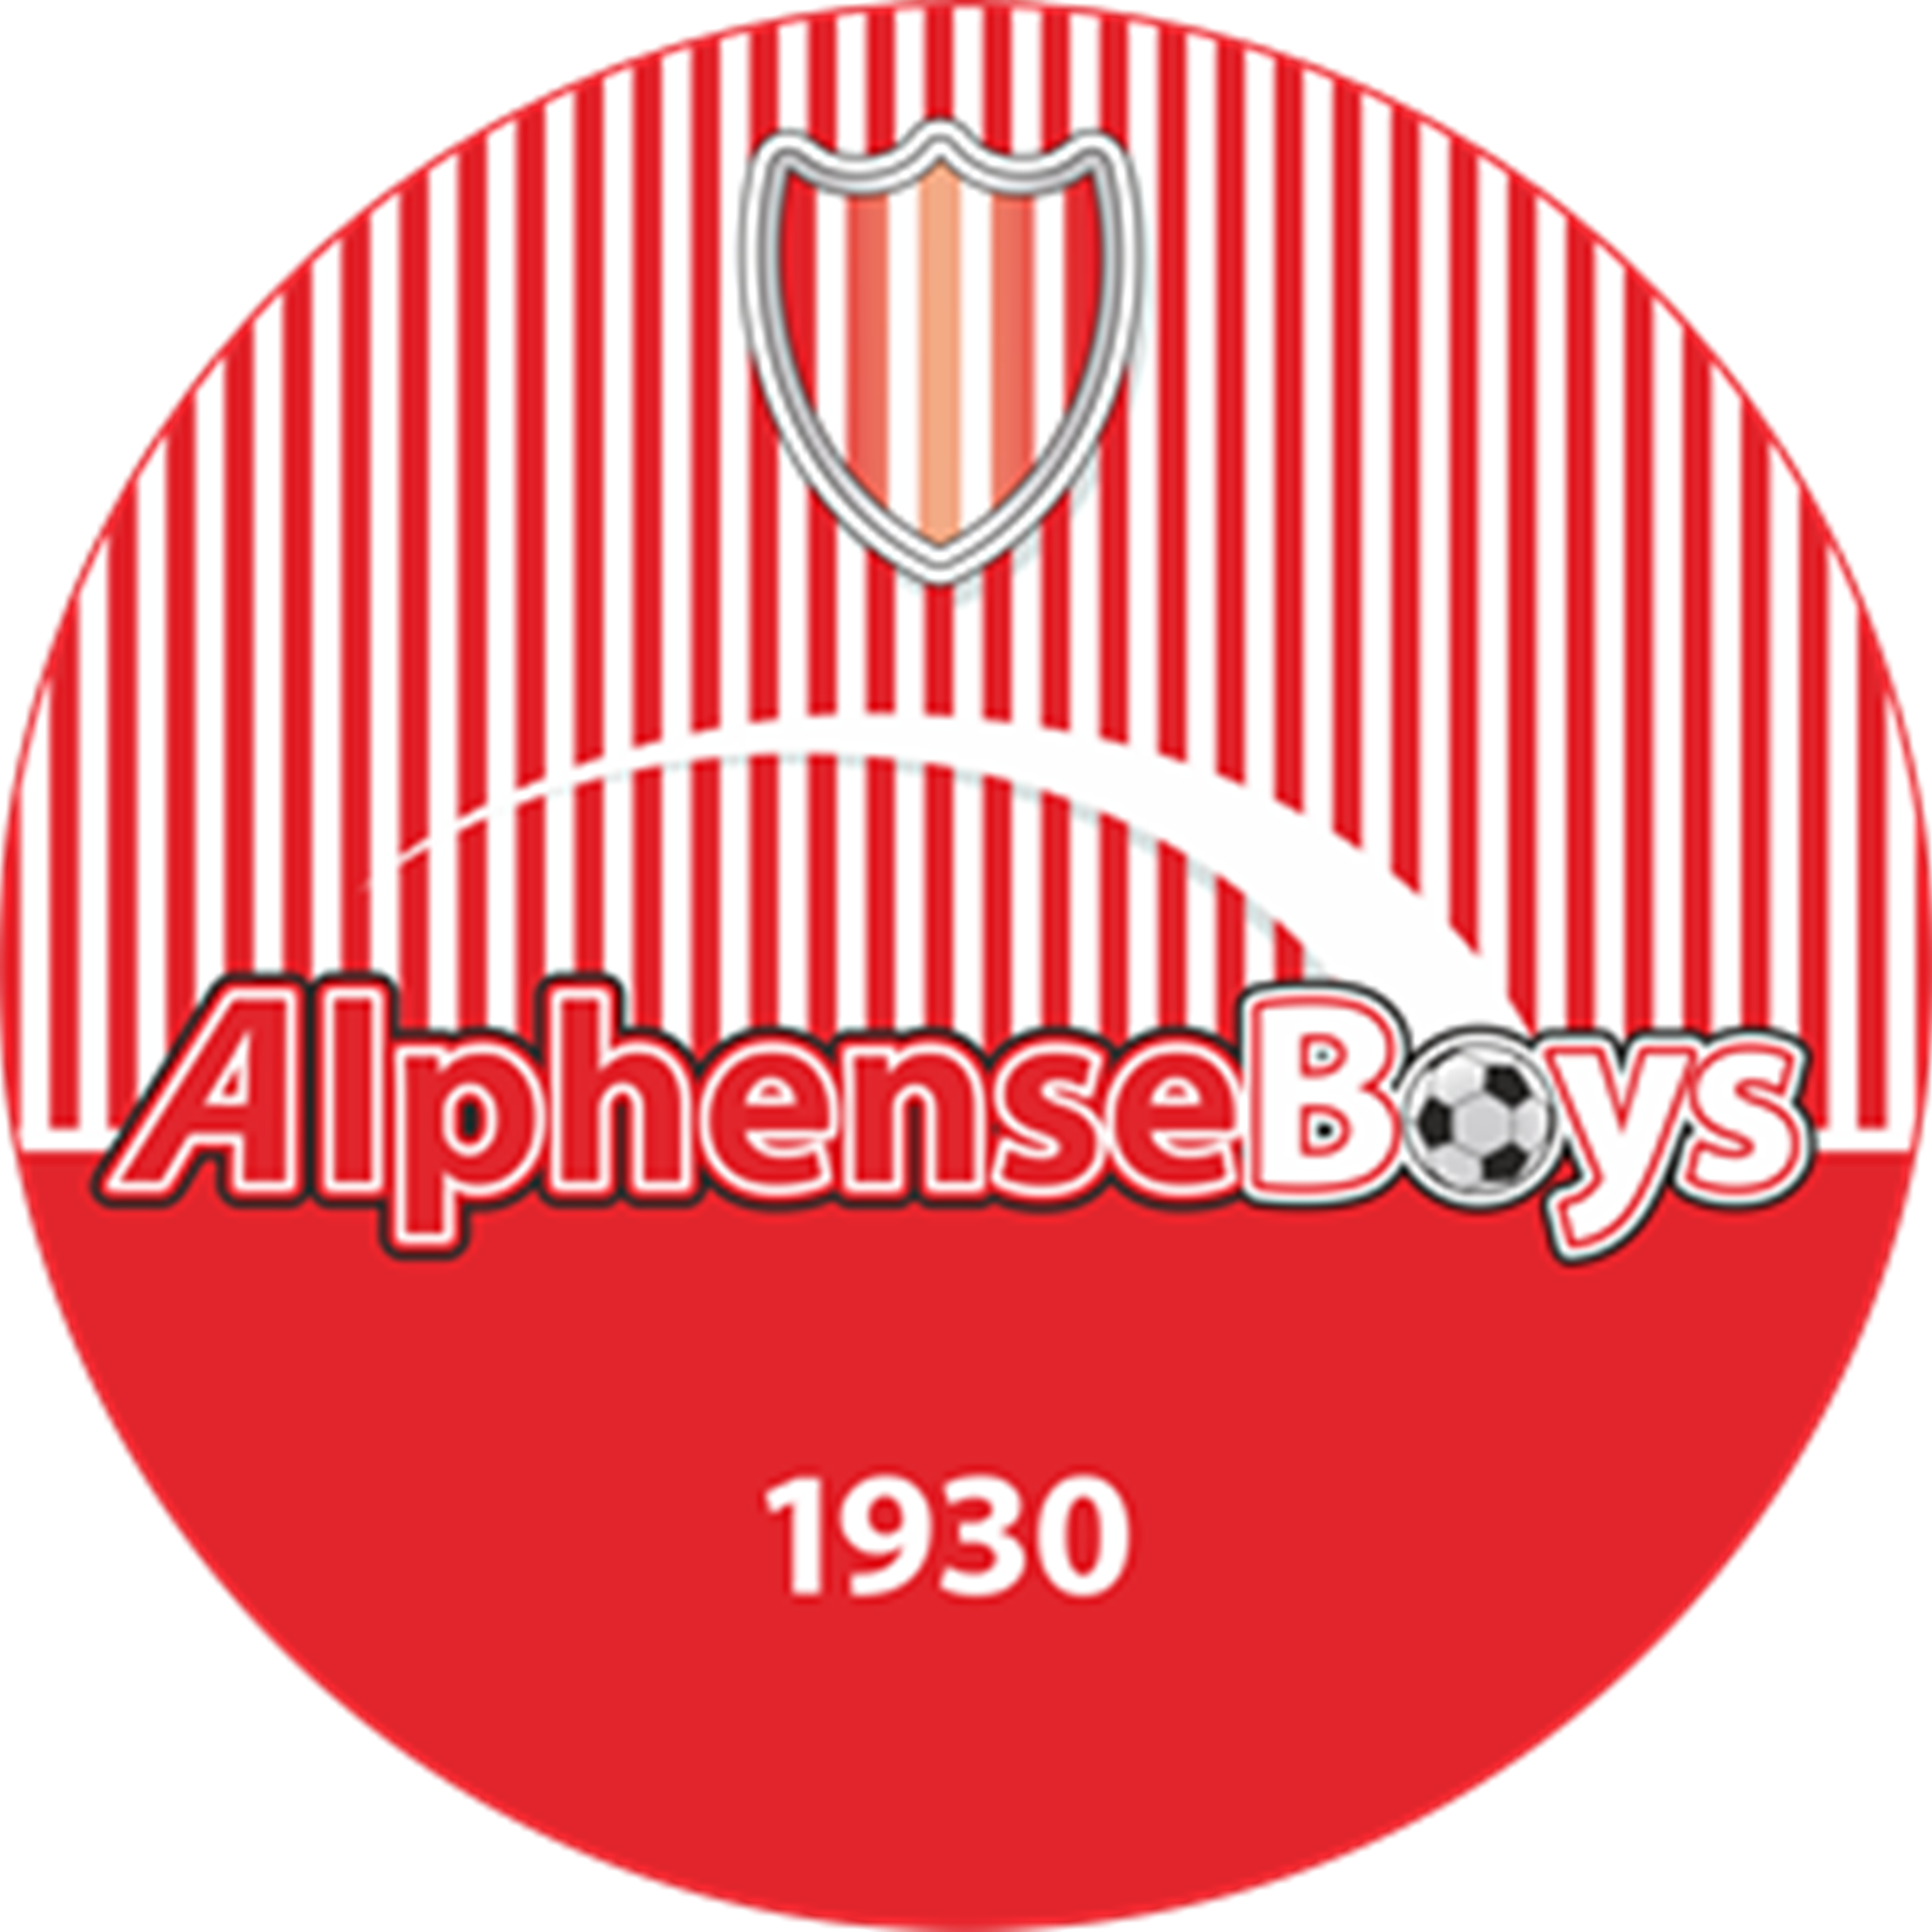 Alphense Boys